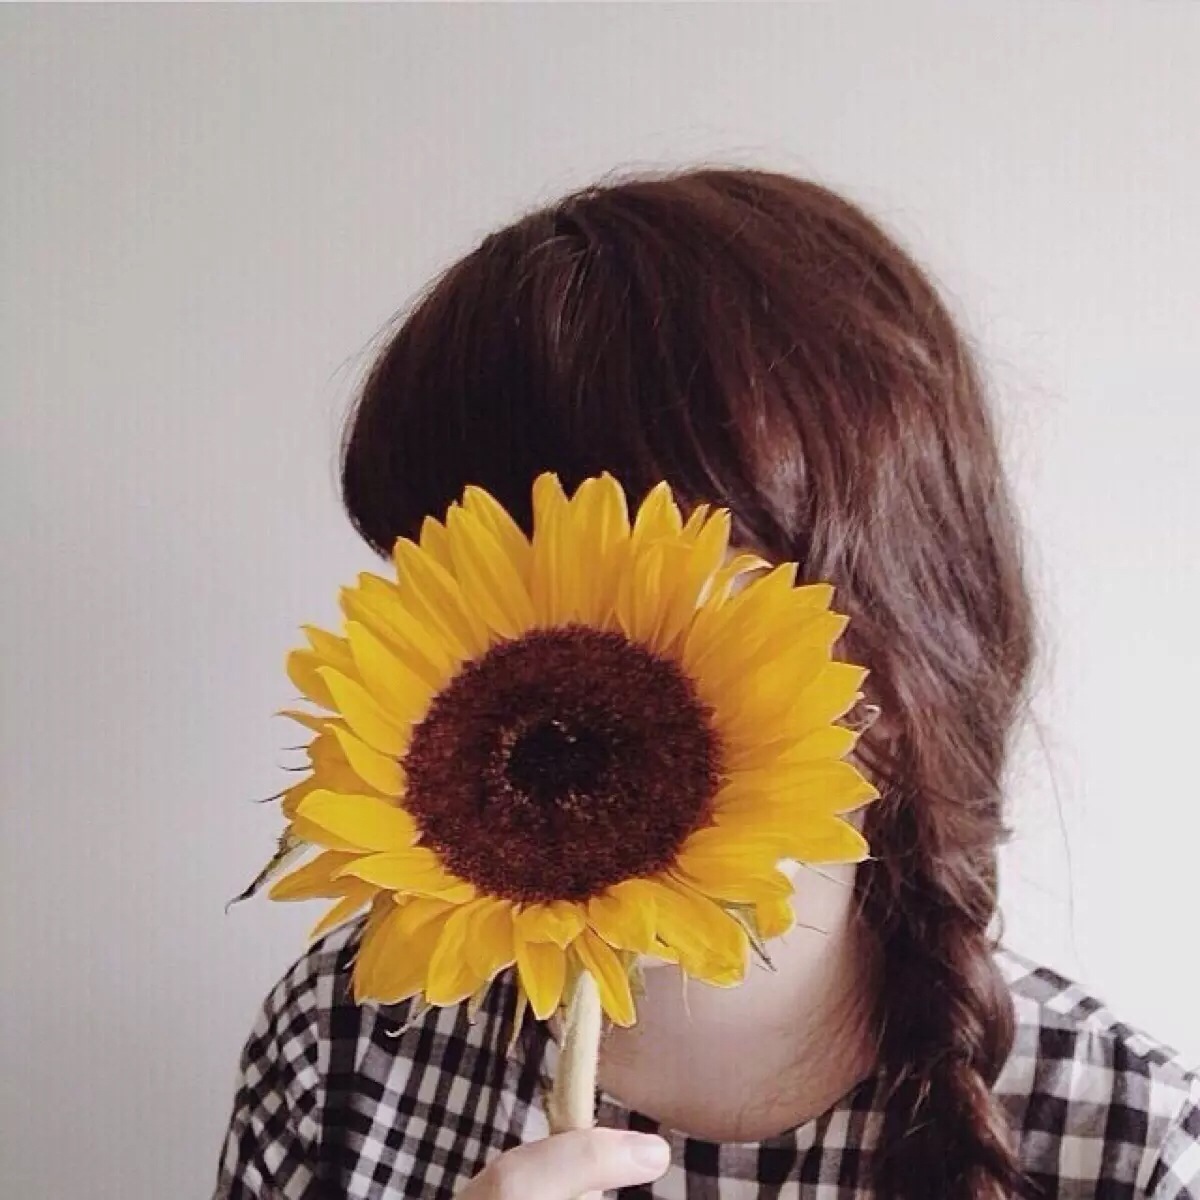 Sunflower Girl Wallpapers - Top Free Sunflower Girl Backgrounds ...